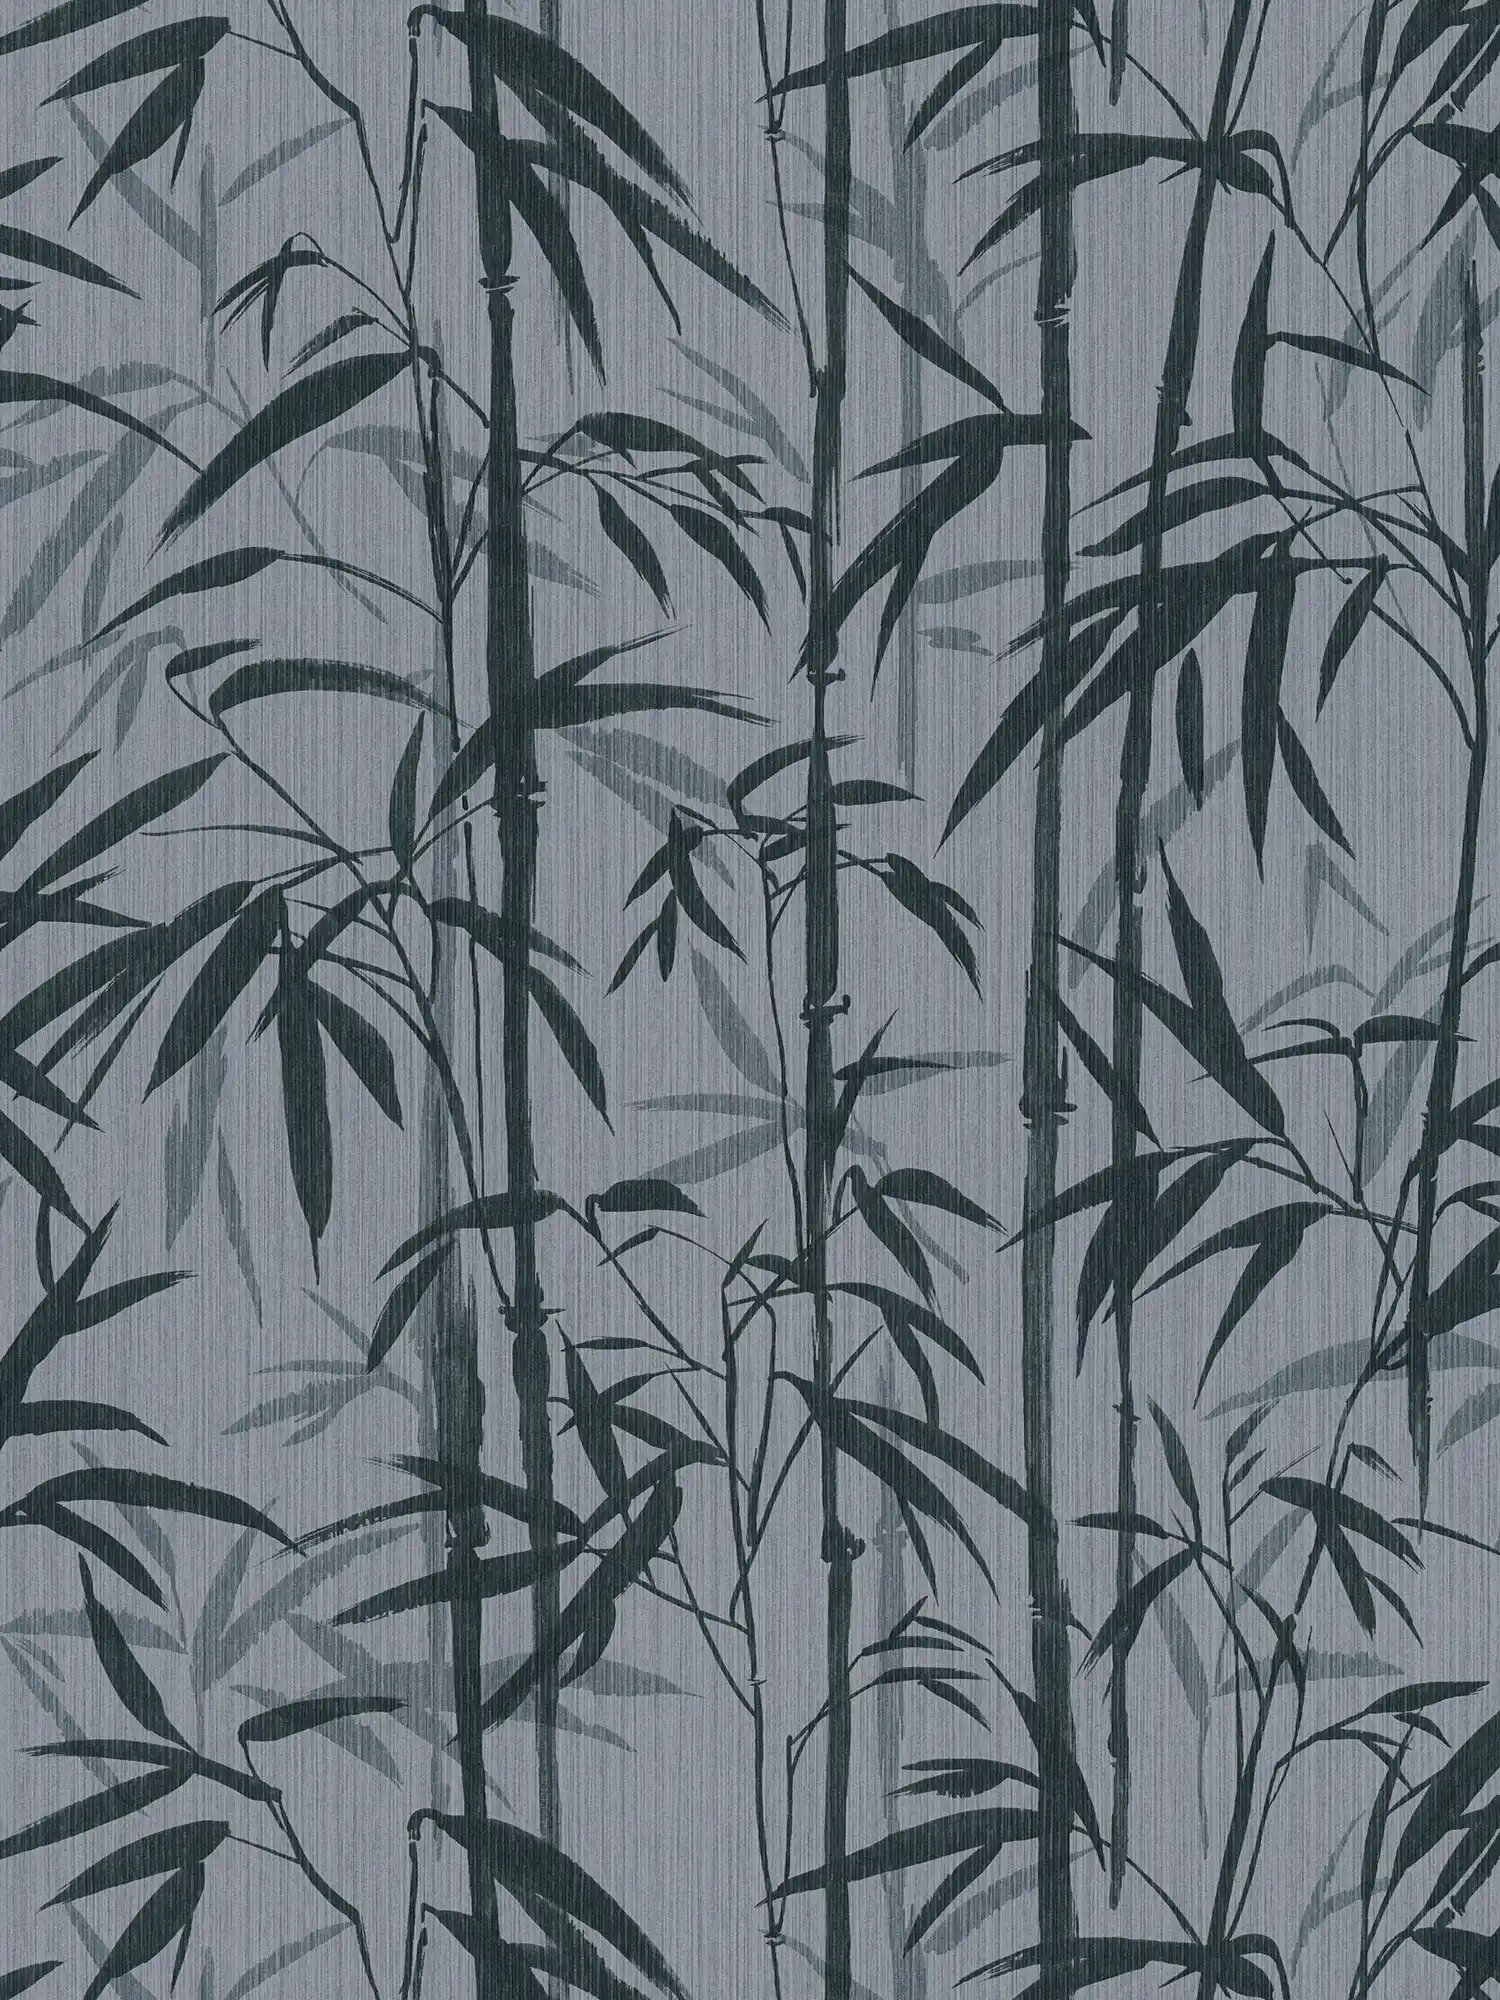         MICHALSKY papier peint intissé motif bambou naturel - gris, noir
    